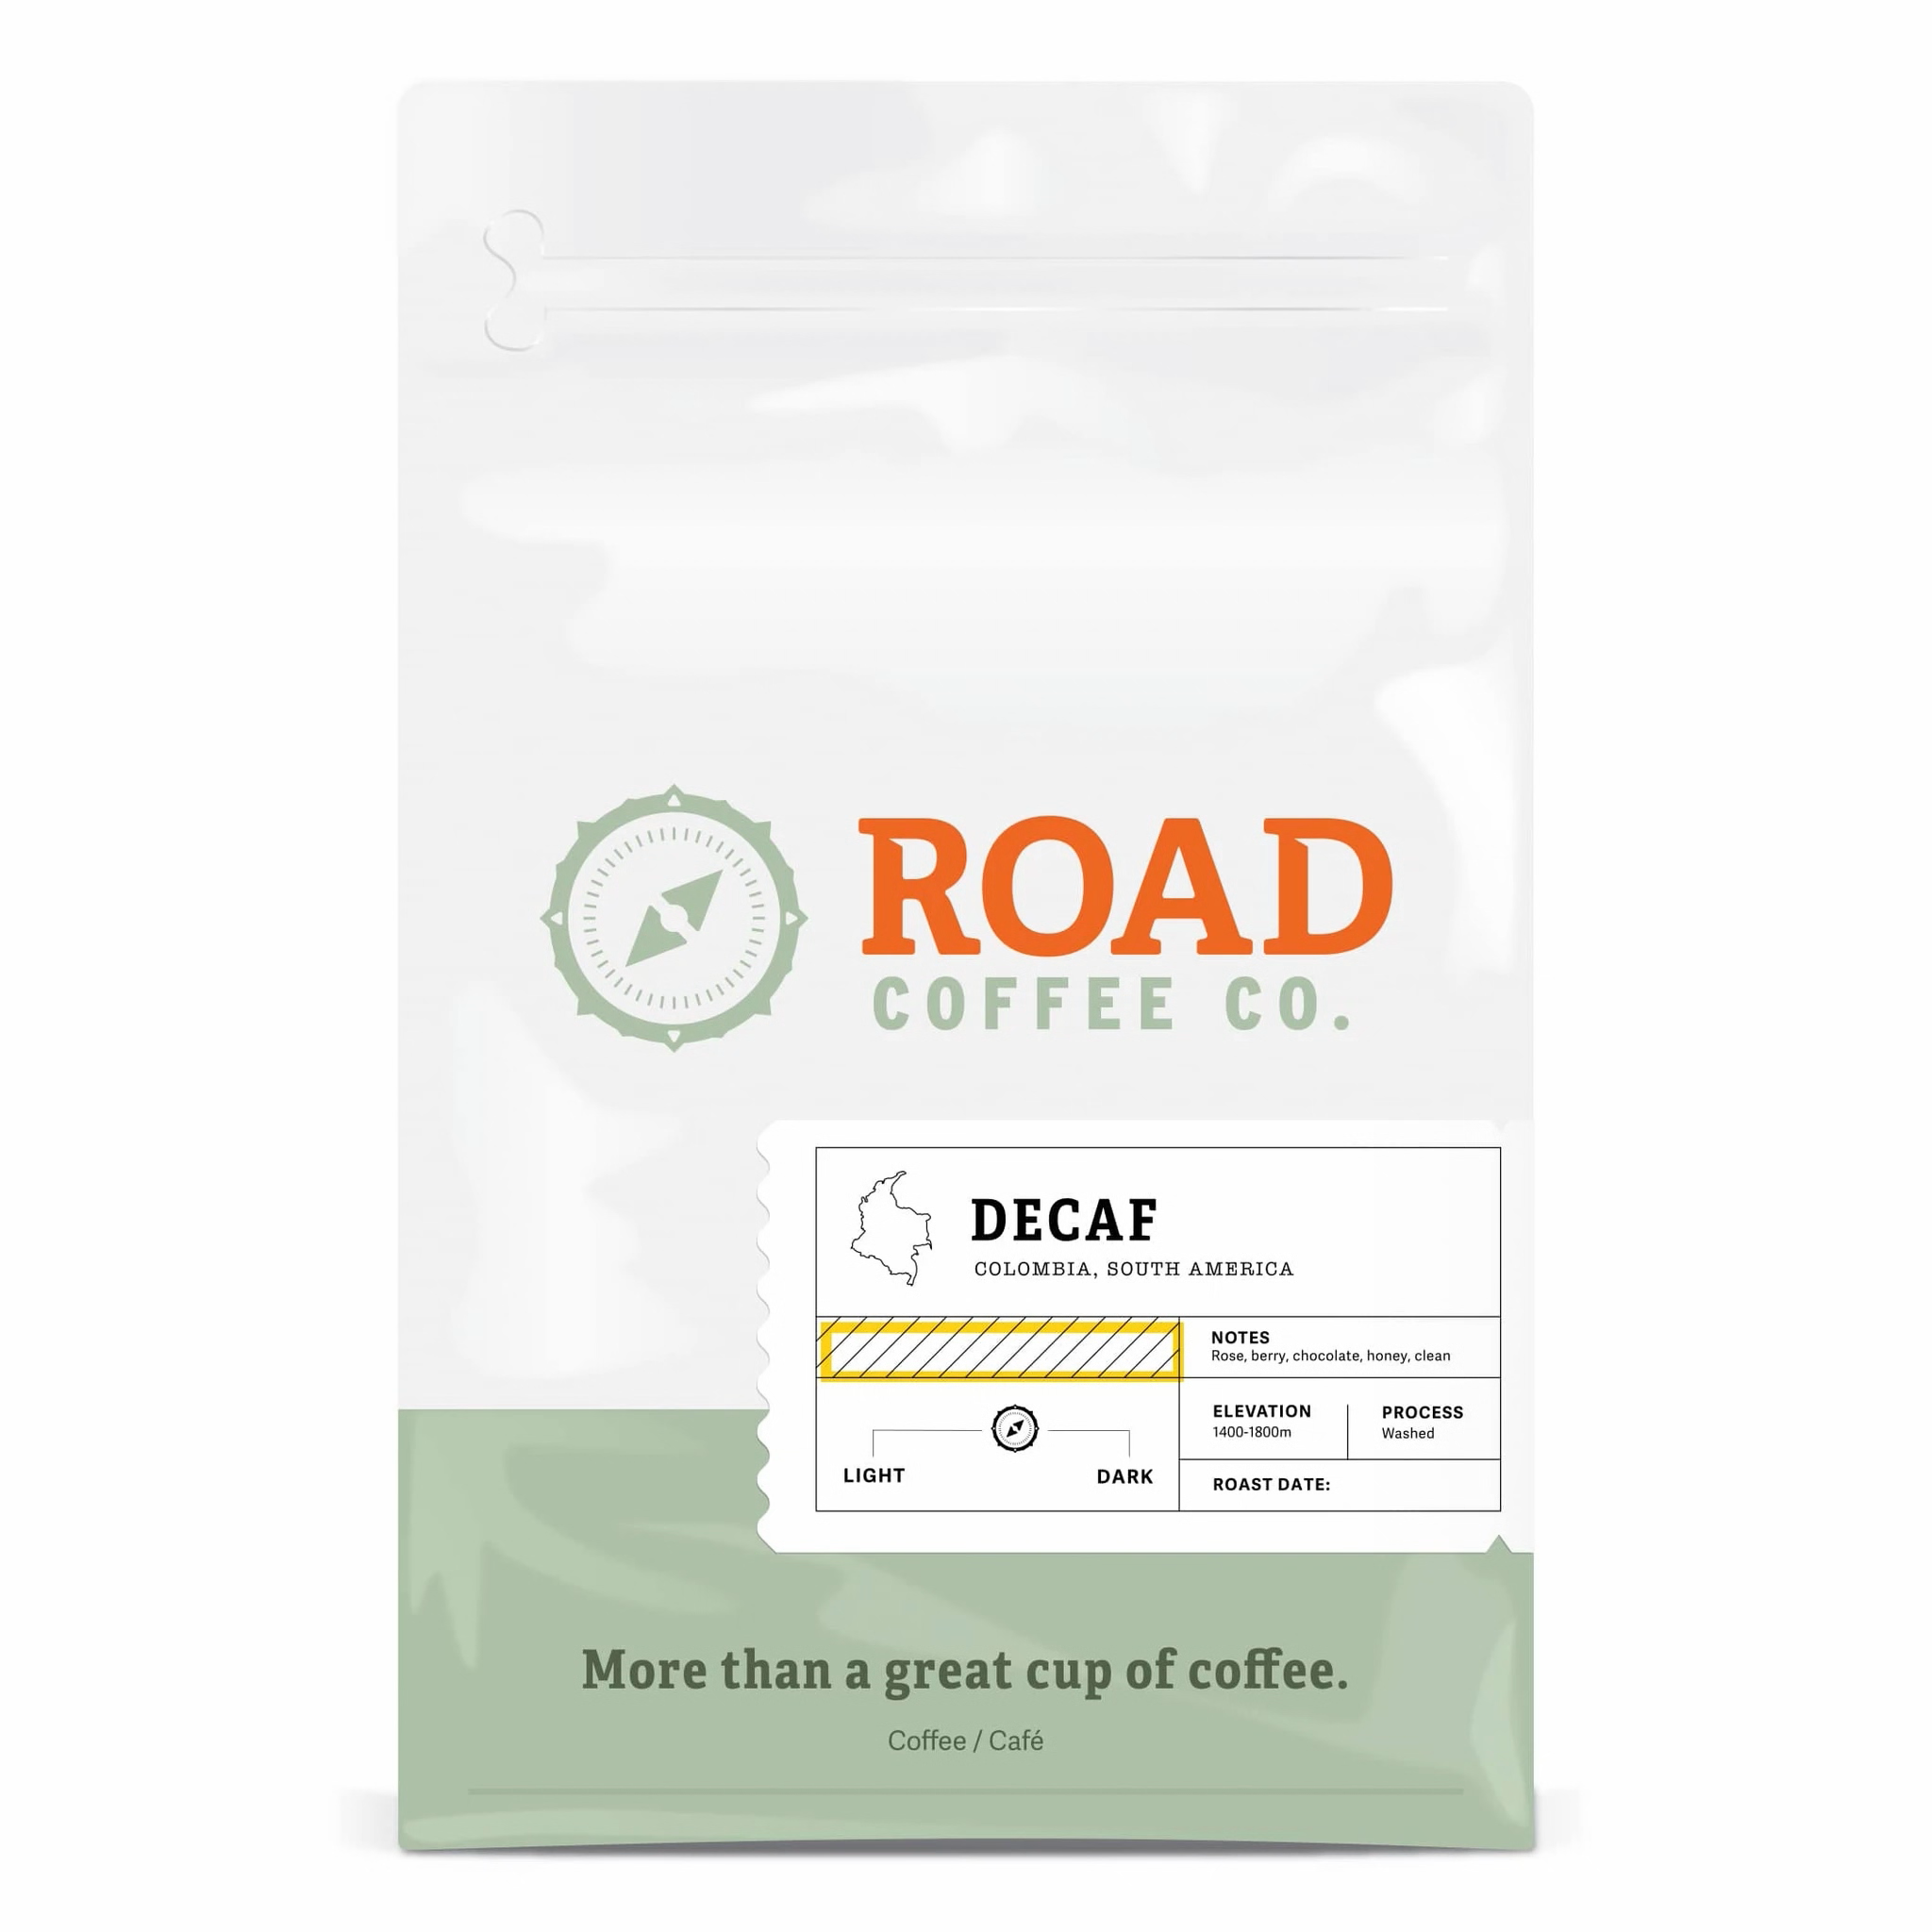 Coffee Bean, Decaf, Road Coffee